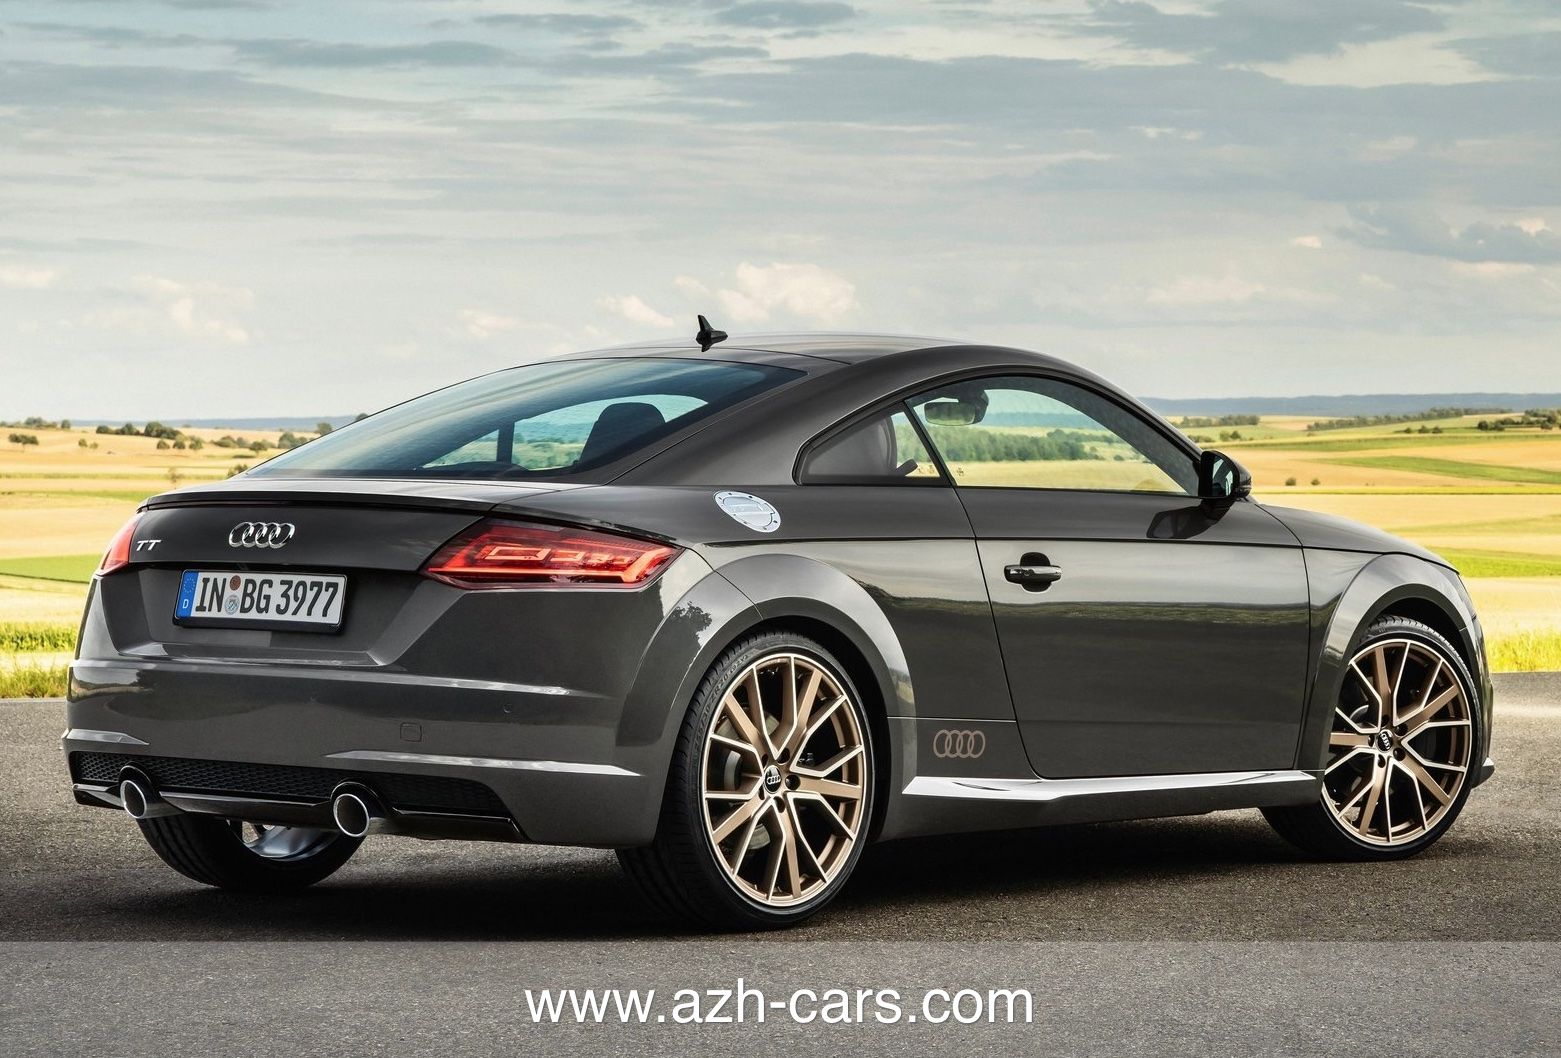 2021 Audi TT Coupe Bronze Selection | Audi tt, Audi, Coupe